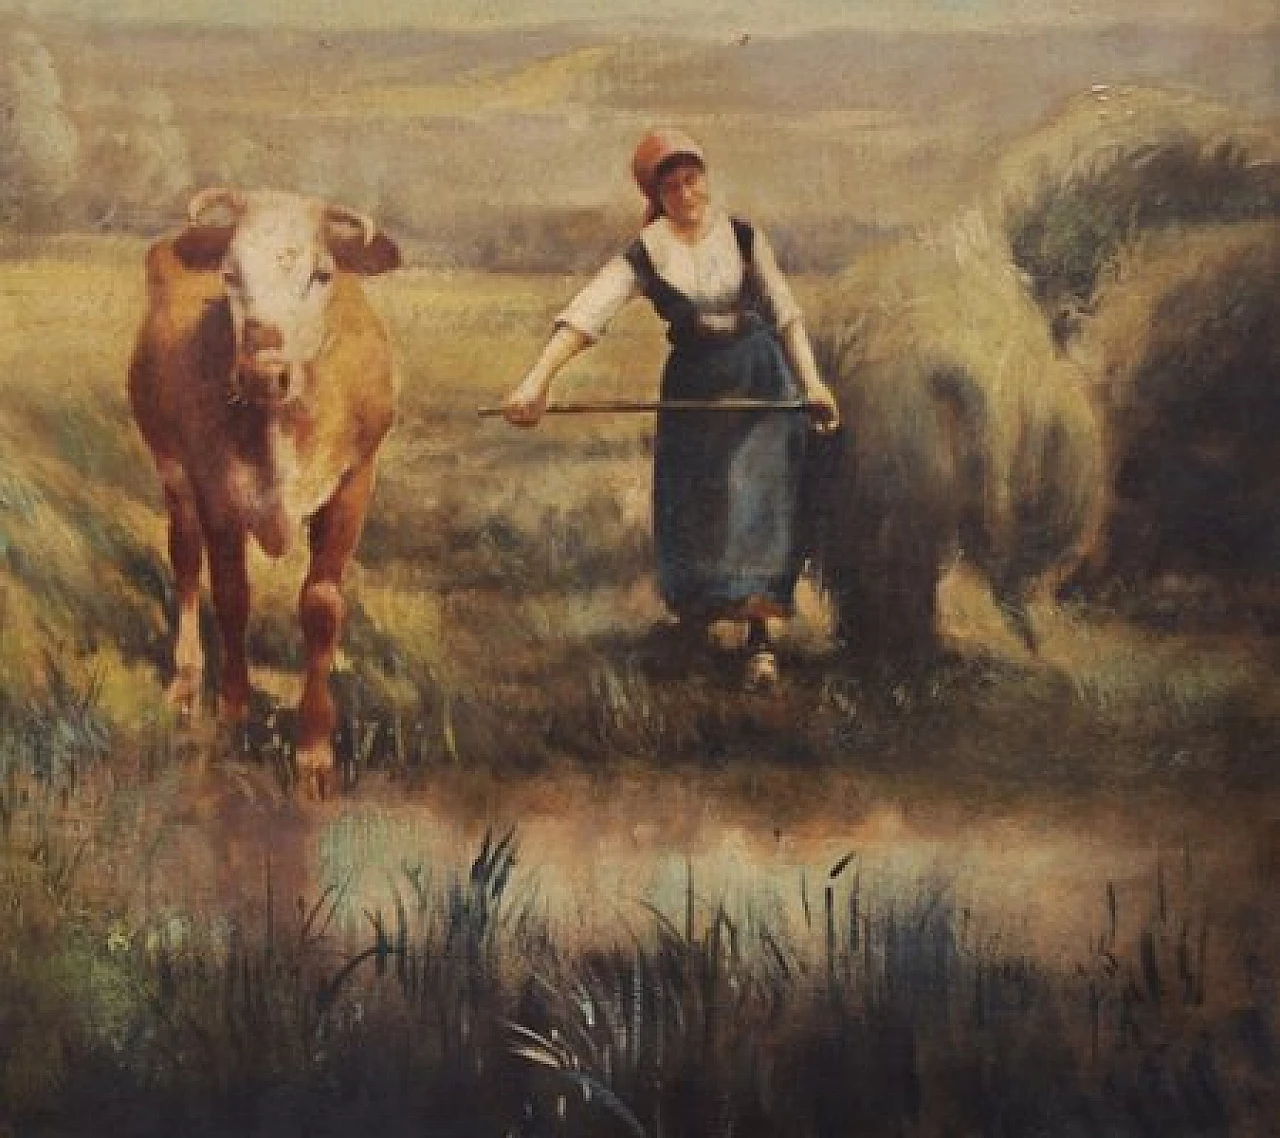 Emilio Pergola, country landscape, oil painting on canvas, 2005 4